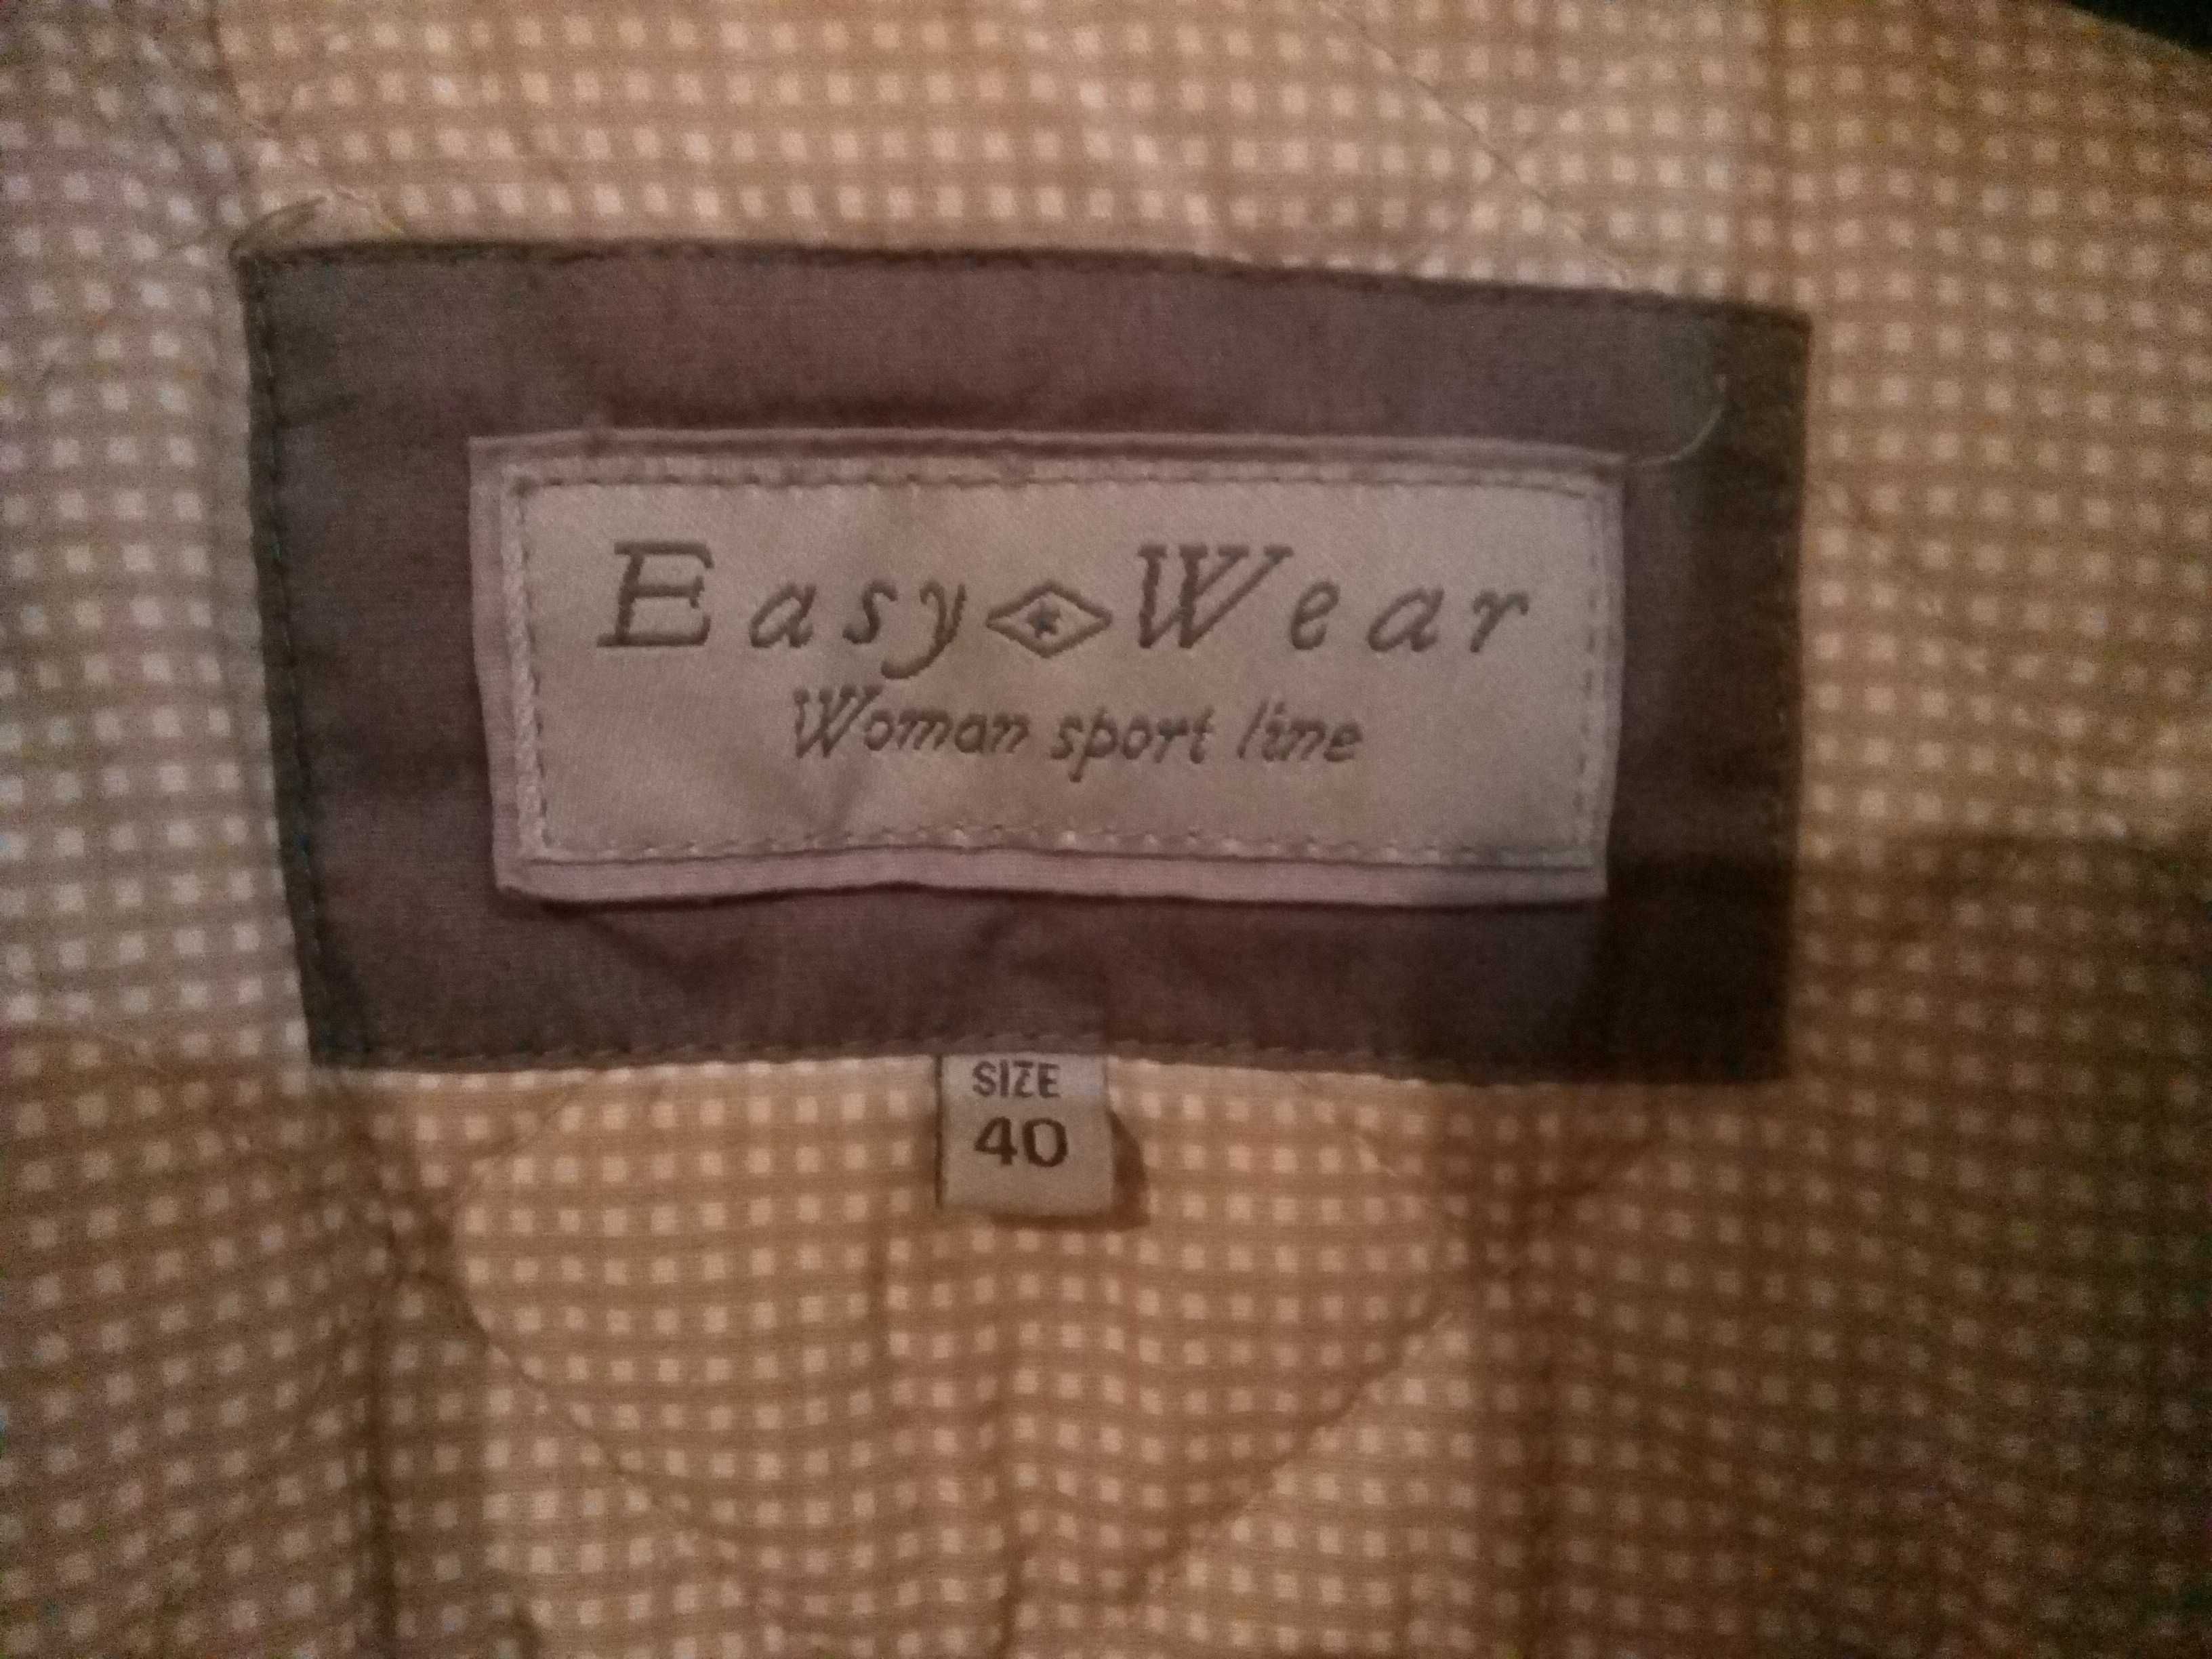 Casaco Easywear Bege - Tamanho 40